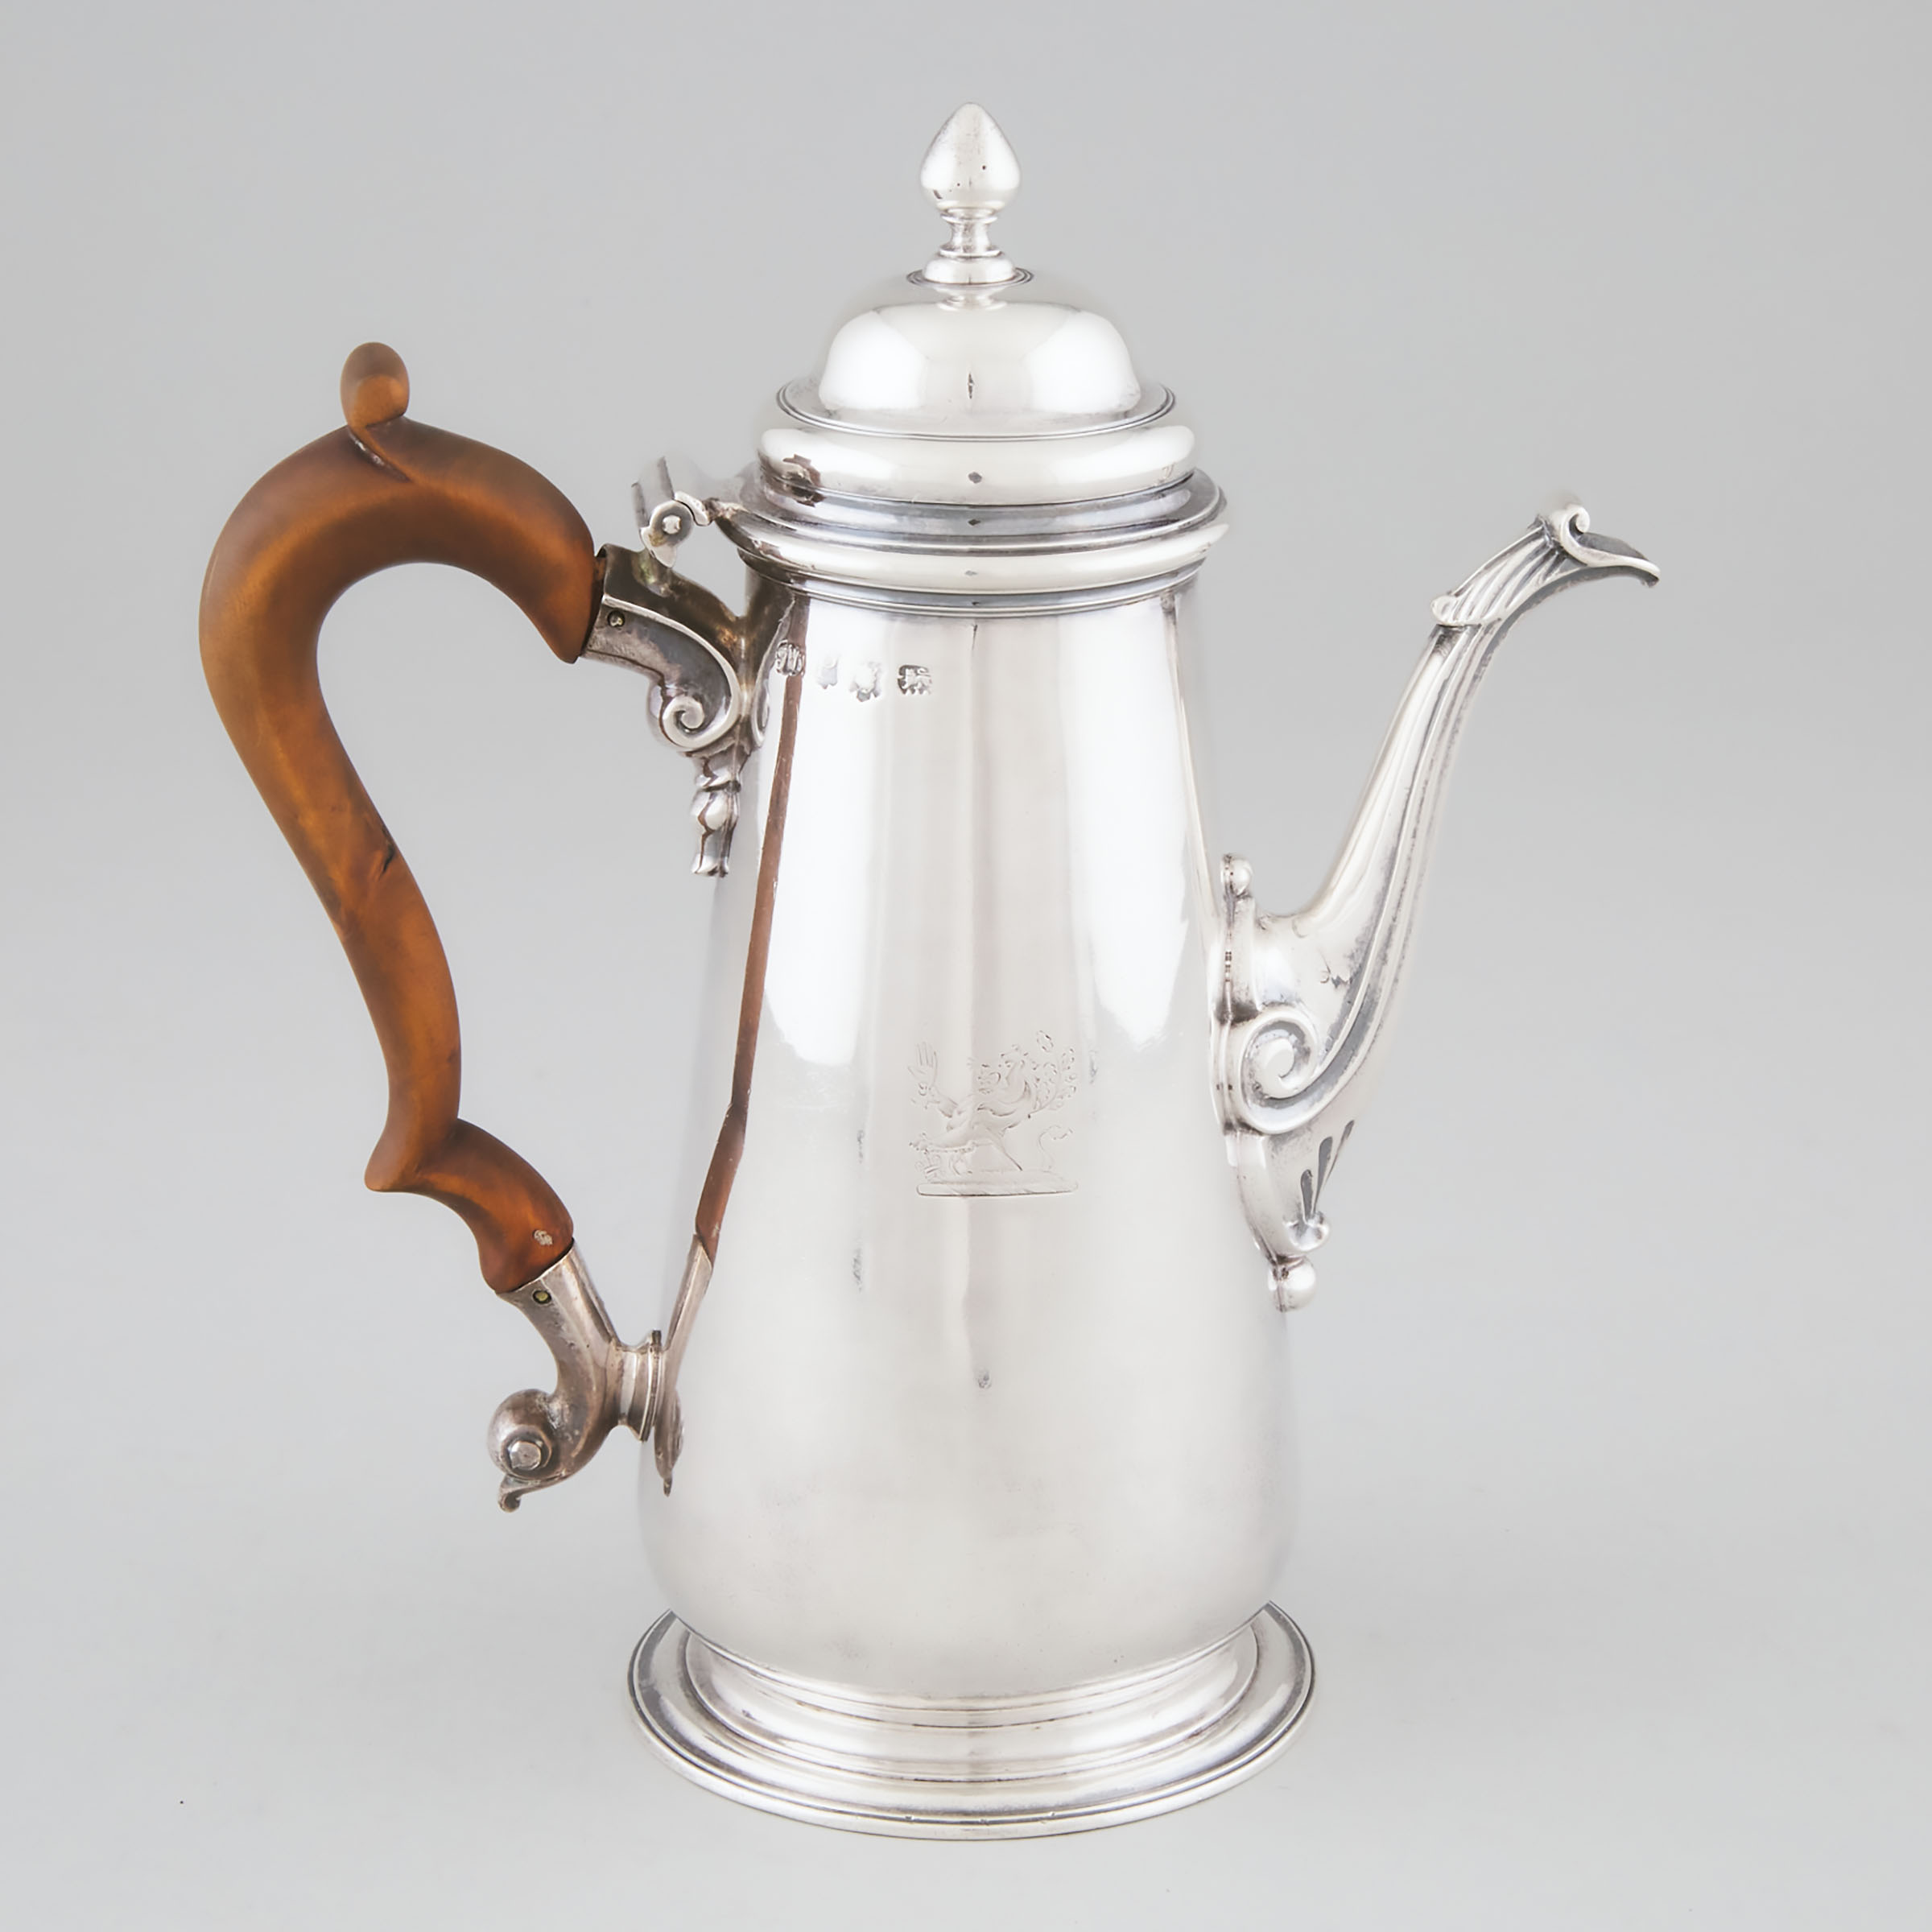 George II Silver Coffee Pot, Thomas Whipham, London, 1750